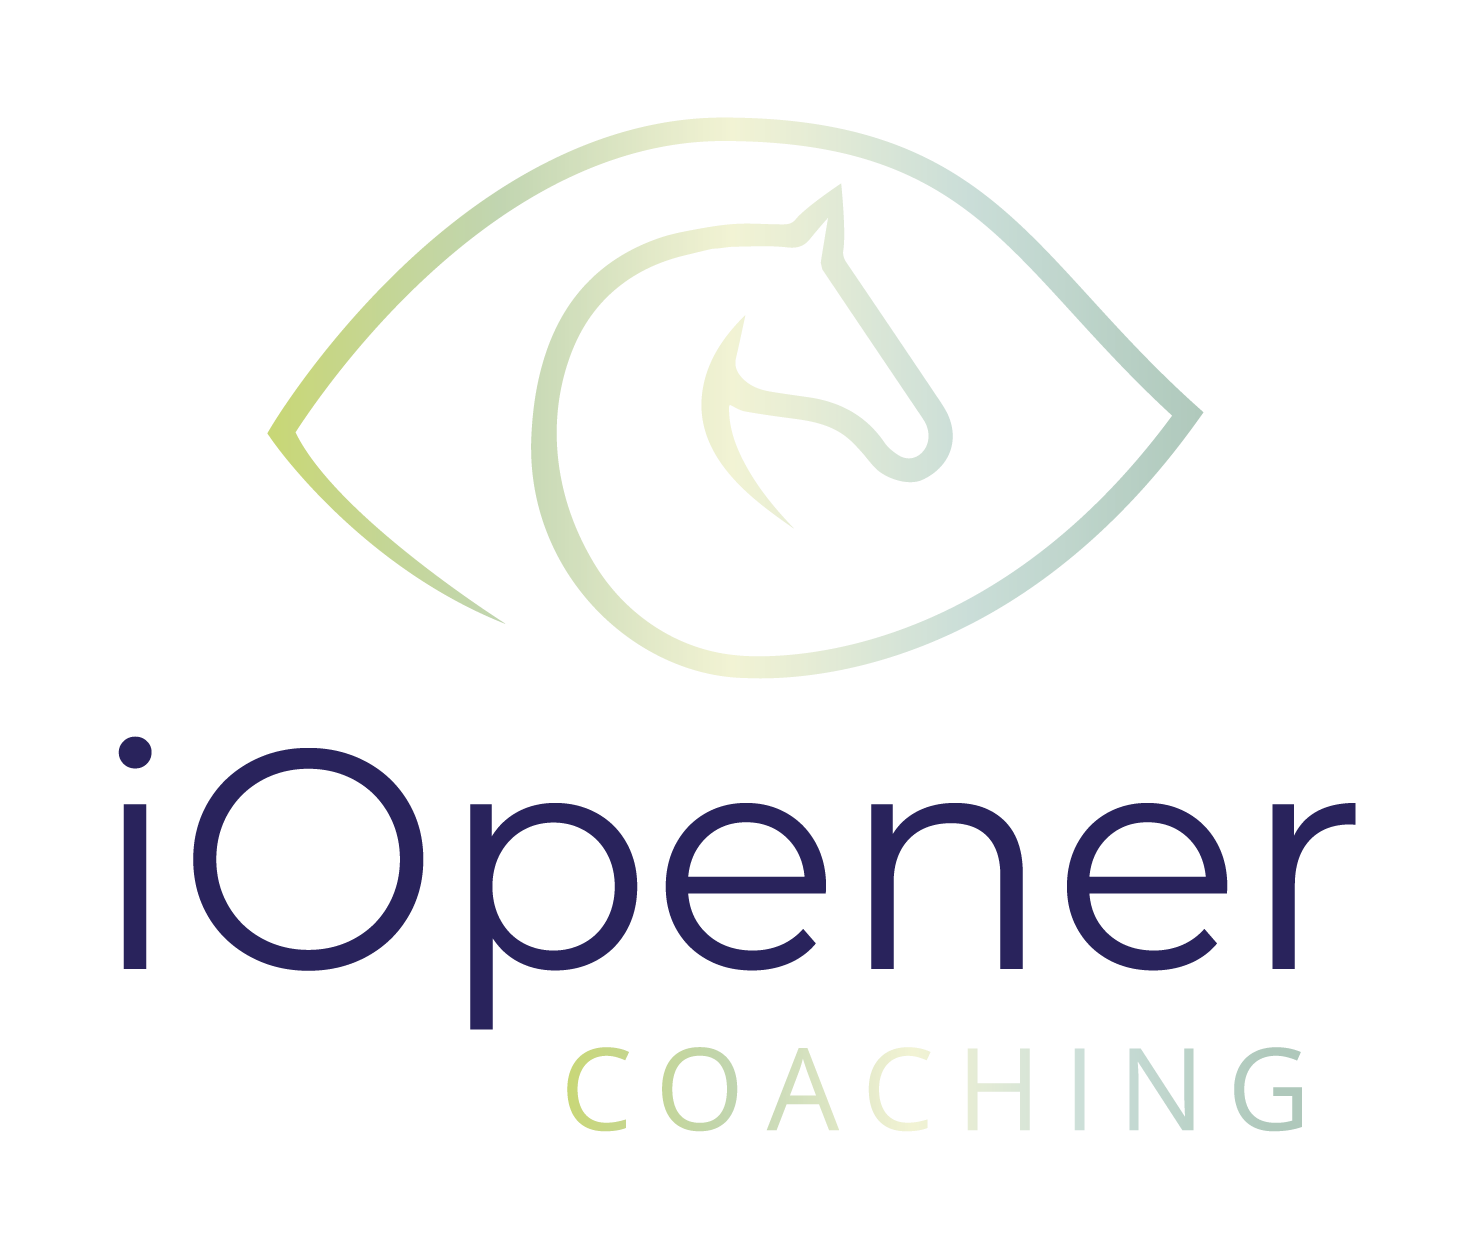 iOpener Coaching